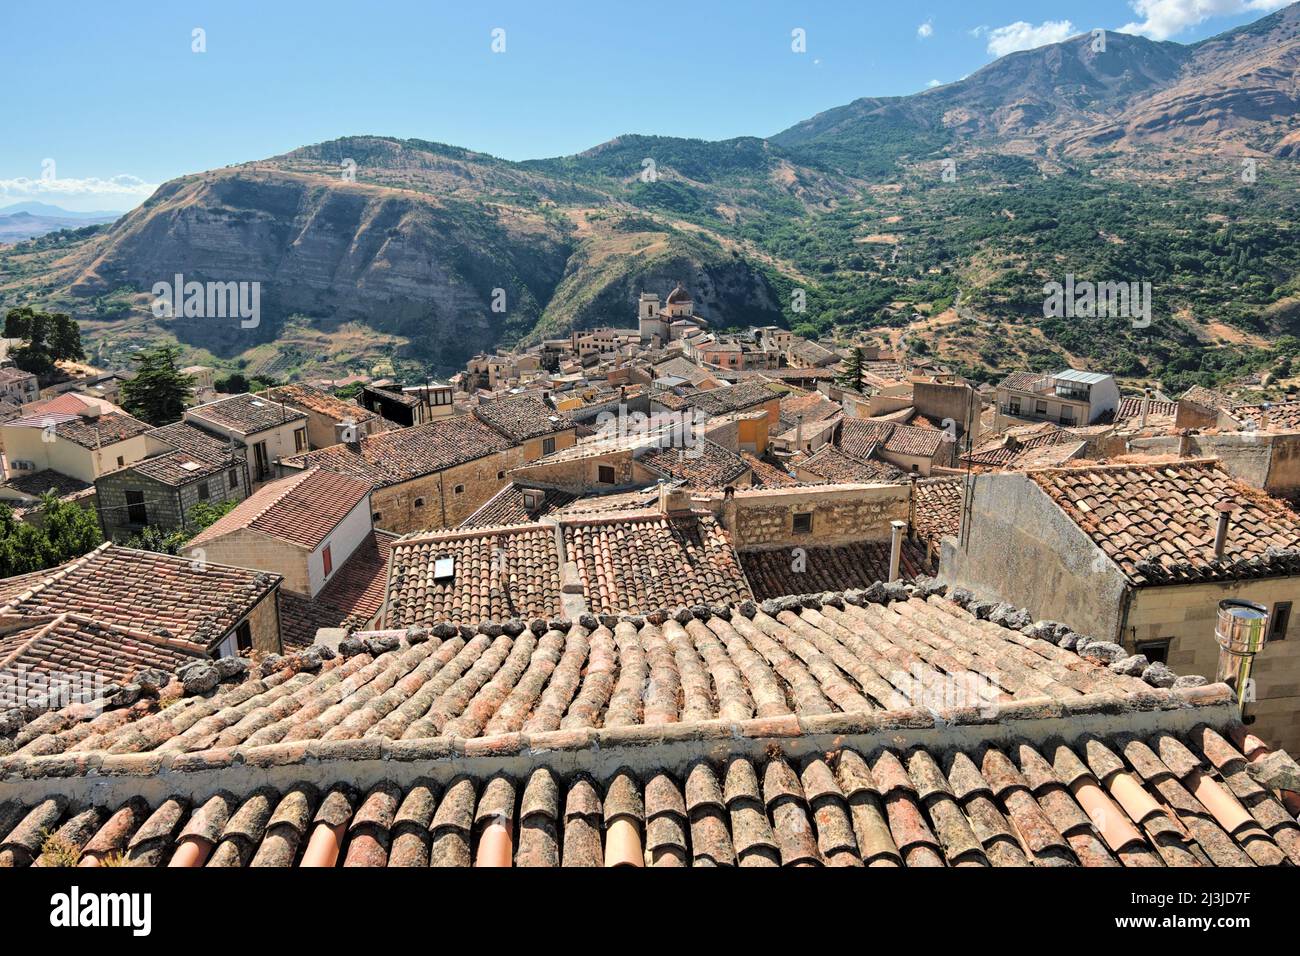 Techo superior de baldosas de terracota de Petralia Sottana pueblo de montaña, Sicilia Foto de stock